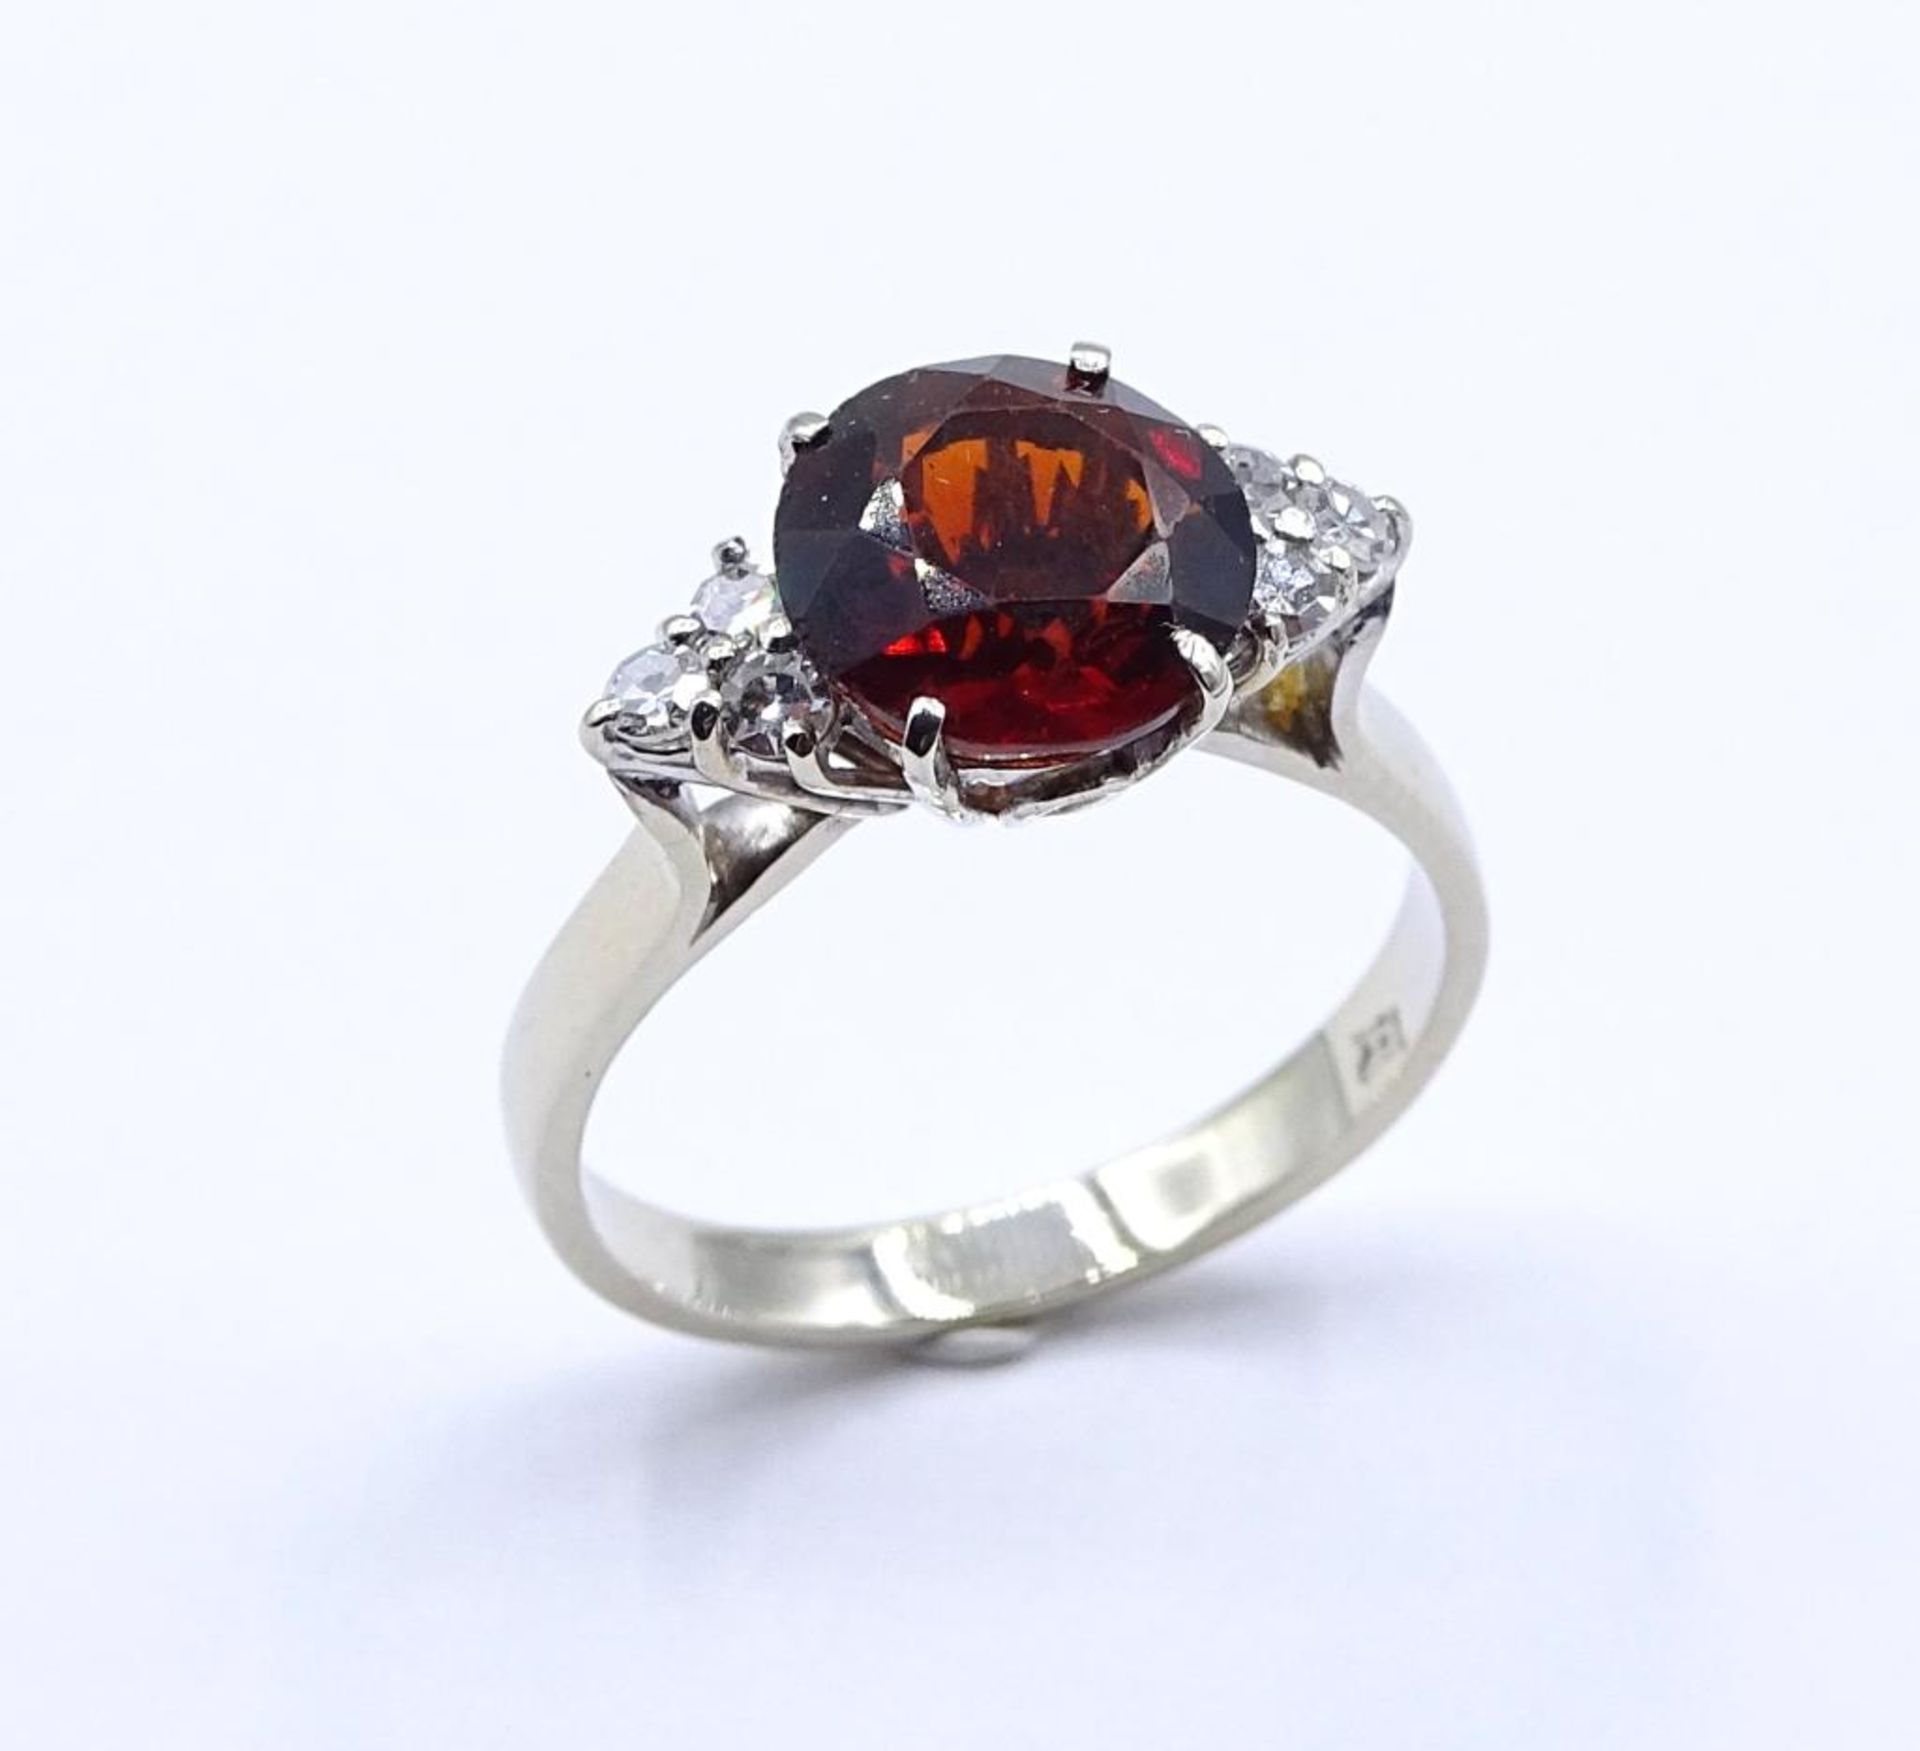 Granat-Brillant-Ring,Weissgold 750/000,3,26gr., RG 52 - Bild 2 aus 2